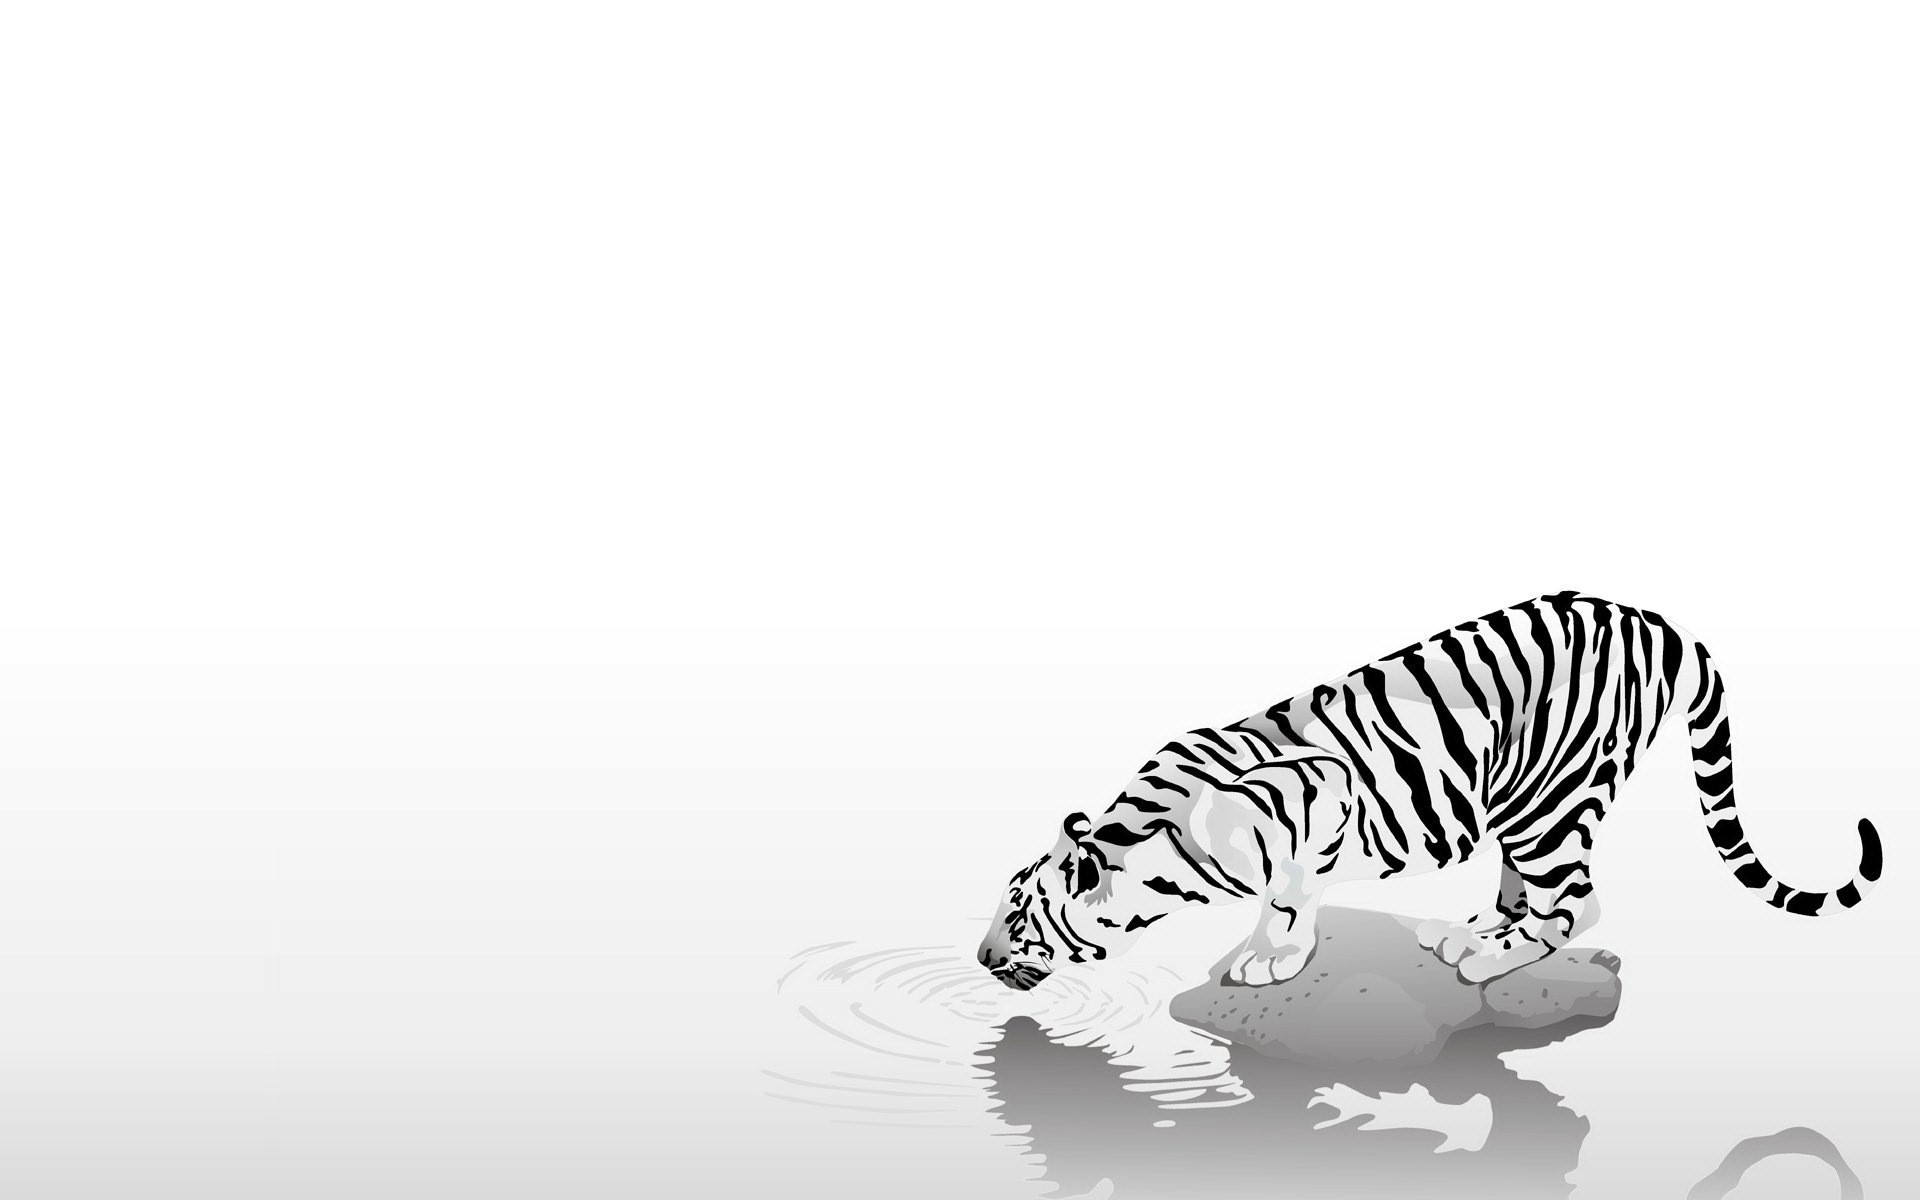 General 1920x1200 tiger minimalism simple background animals mammals artwork white background big cats reflection water ripples